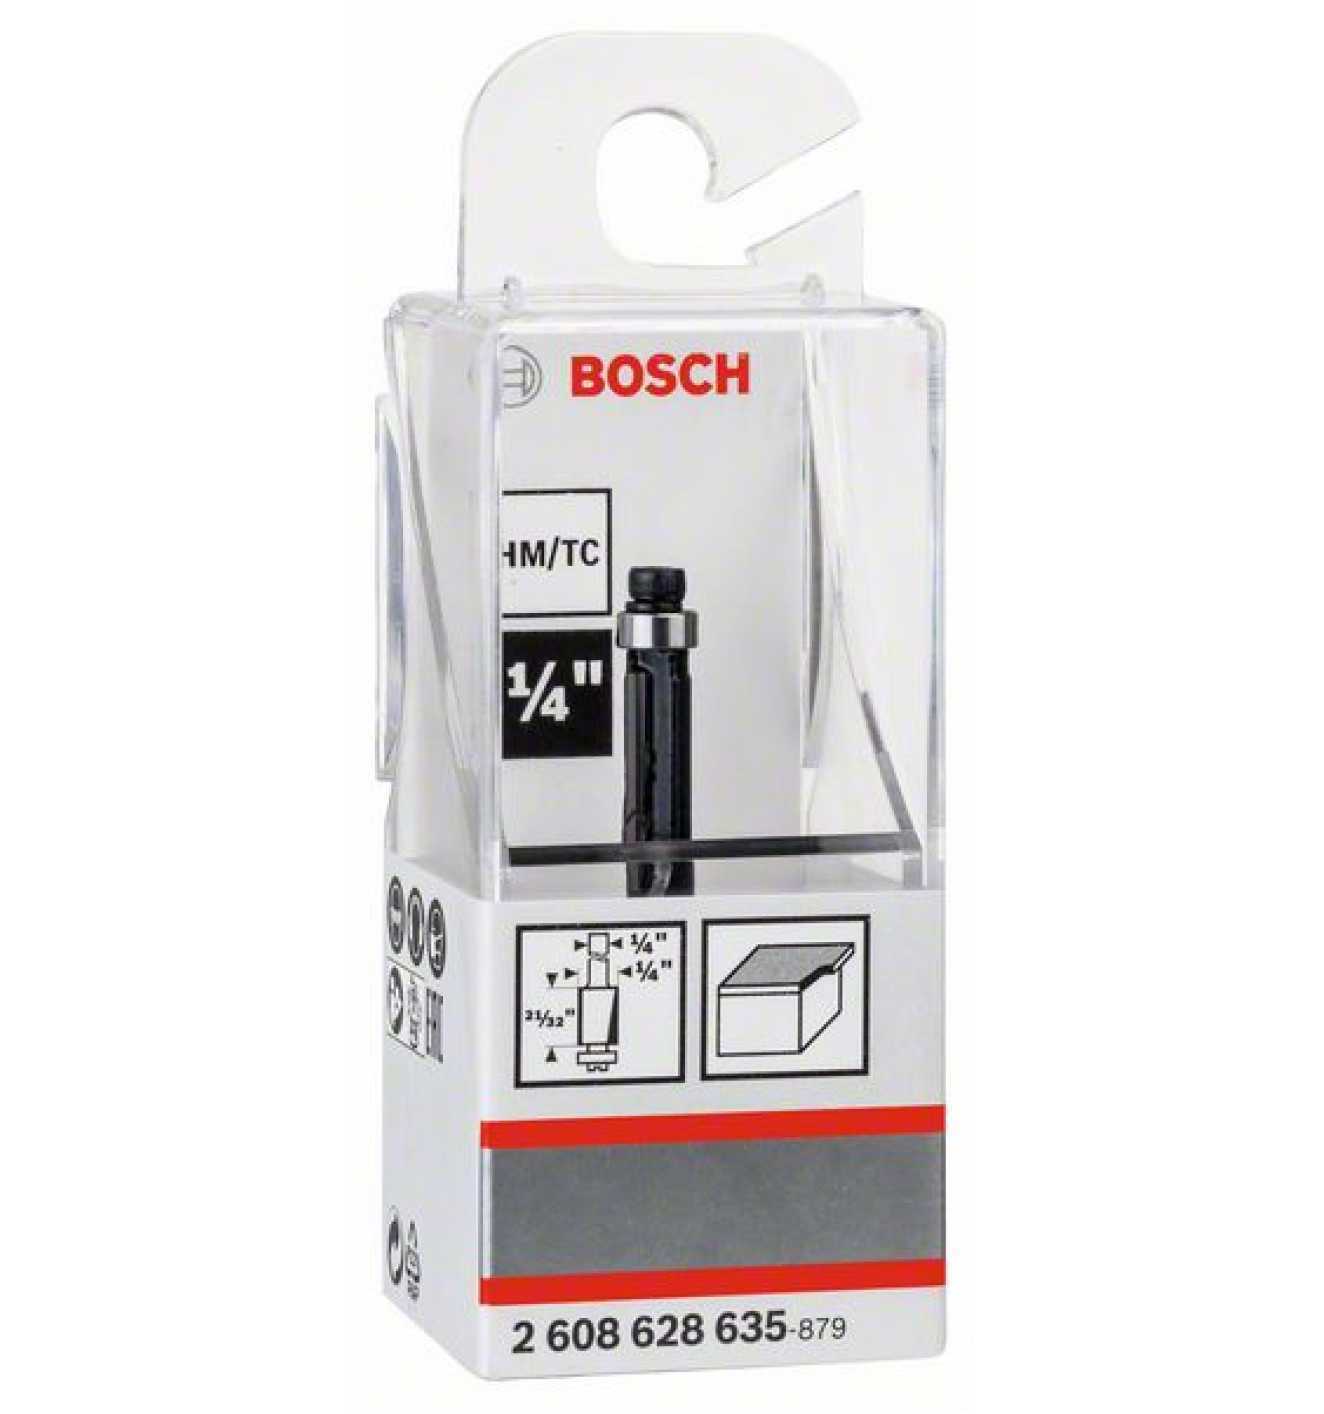 Bosch Laminate trim bit, 1/4", D1 6.35 mm, L 16.2 mm, G 54 mm 2608628635 Power Tool Services